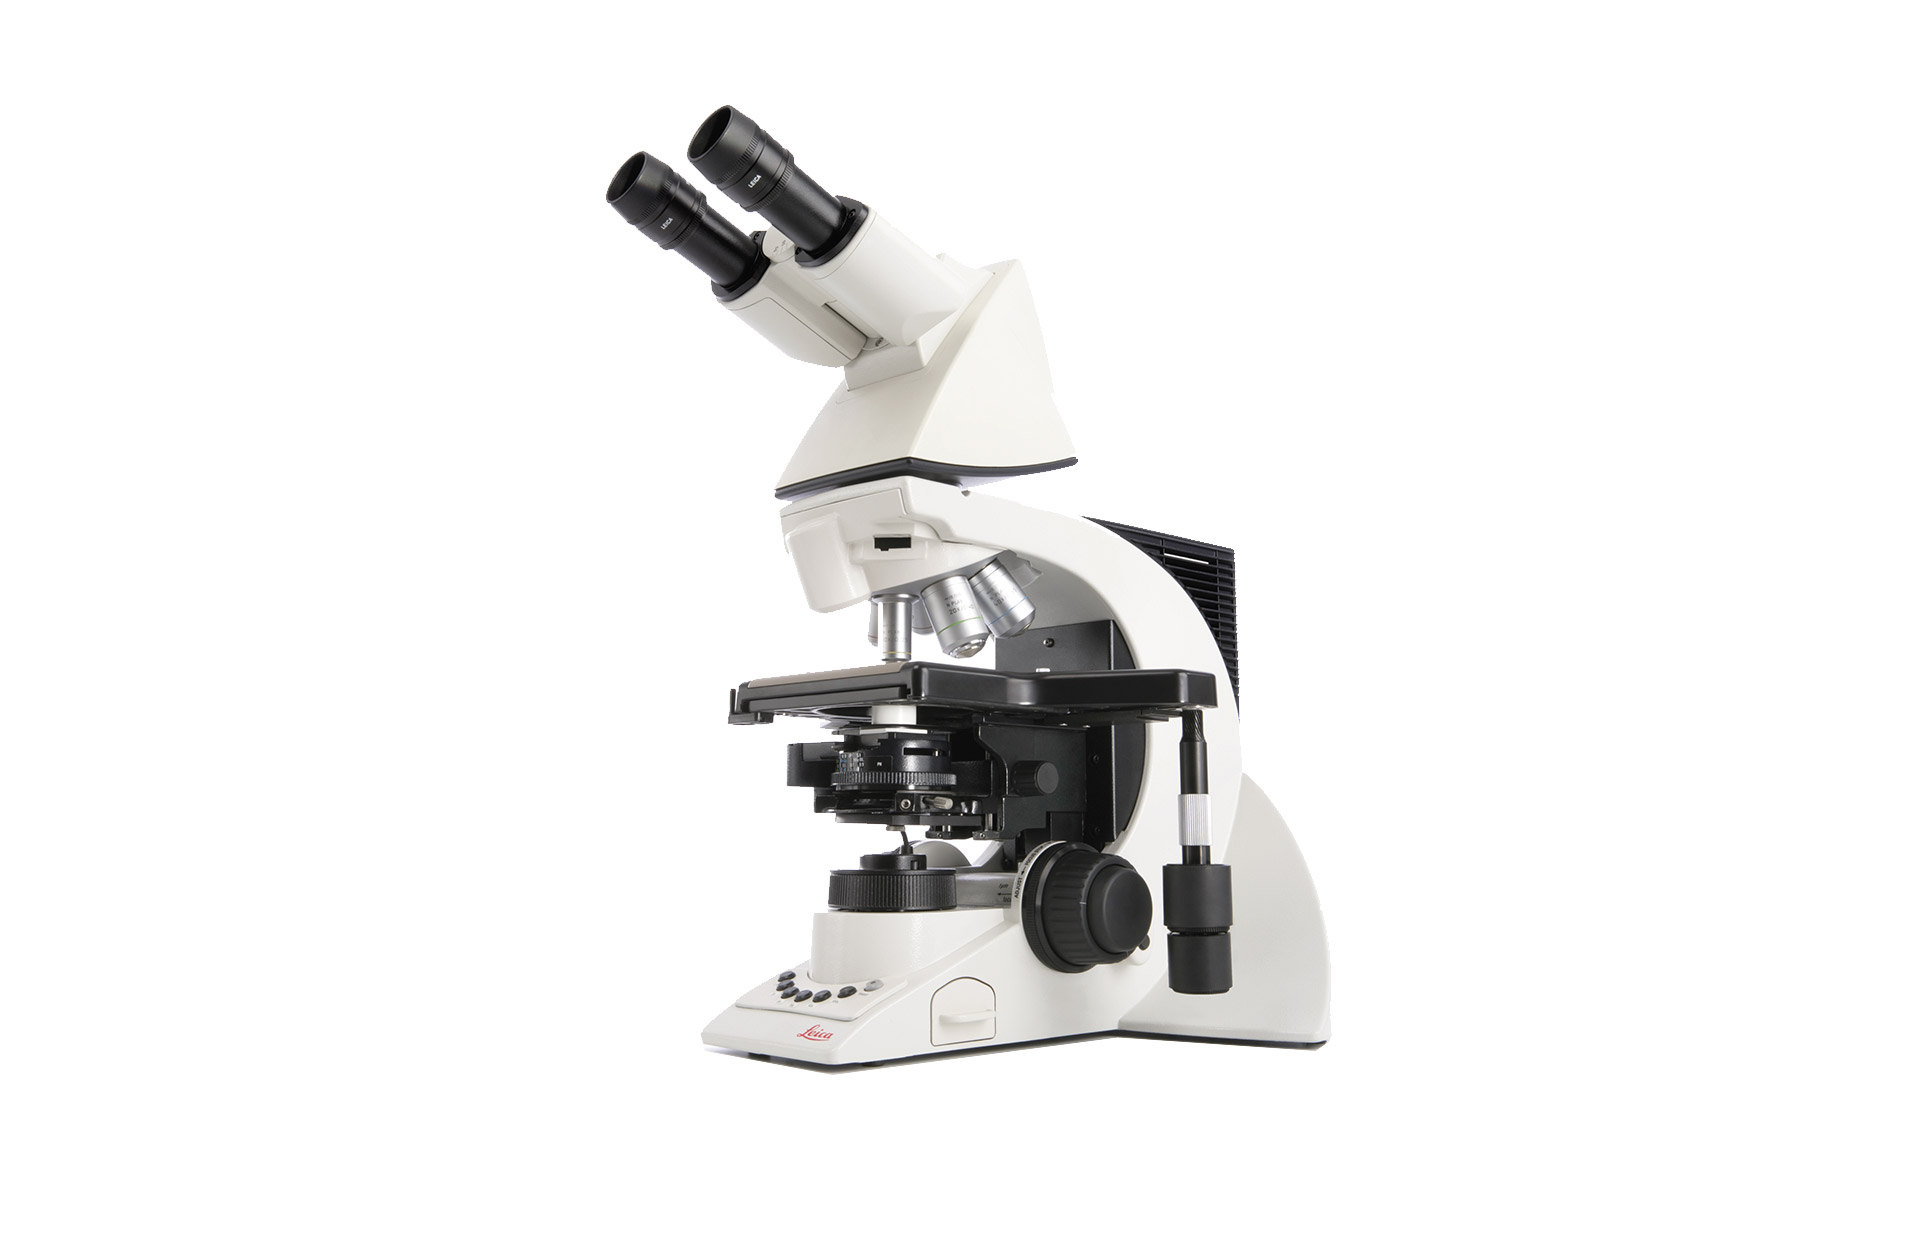 Leica DM3000 Systemmikroskop